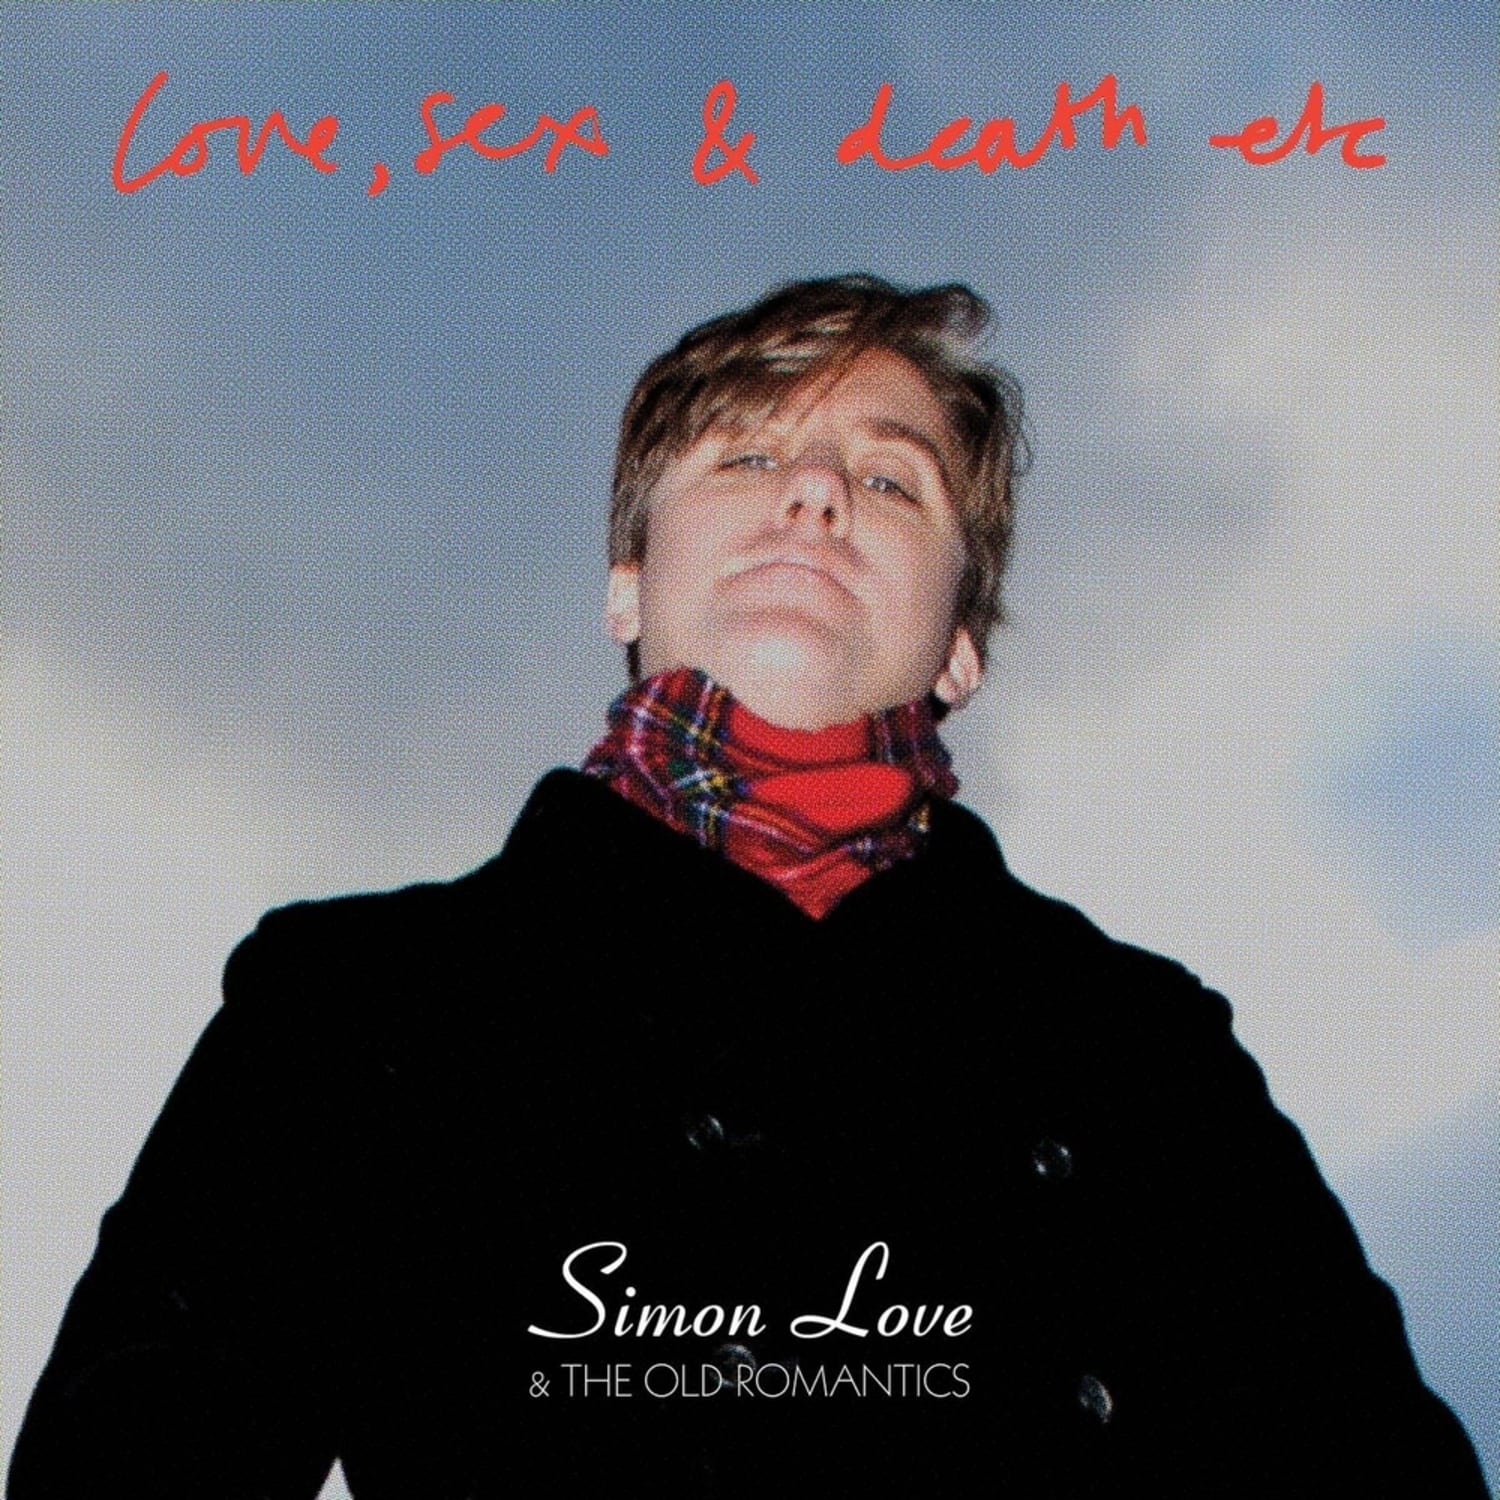 Simon Love & The Old Romantics - LOVE, SEX AND DEATH ETC 